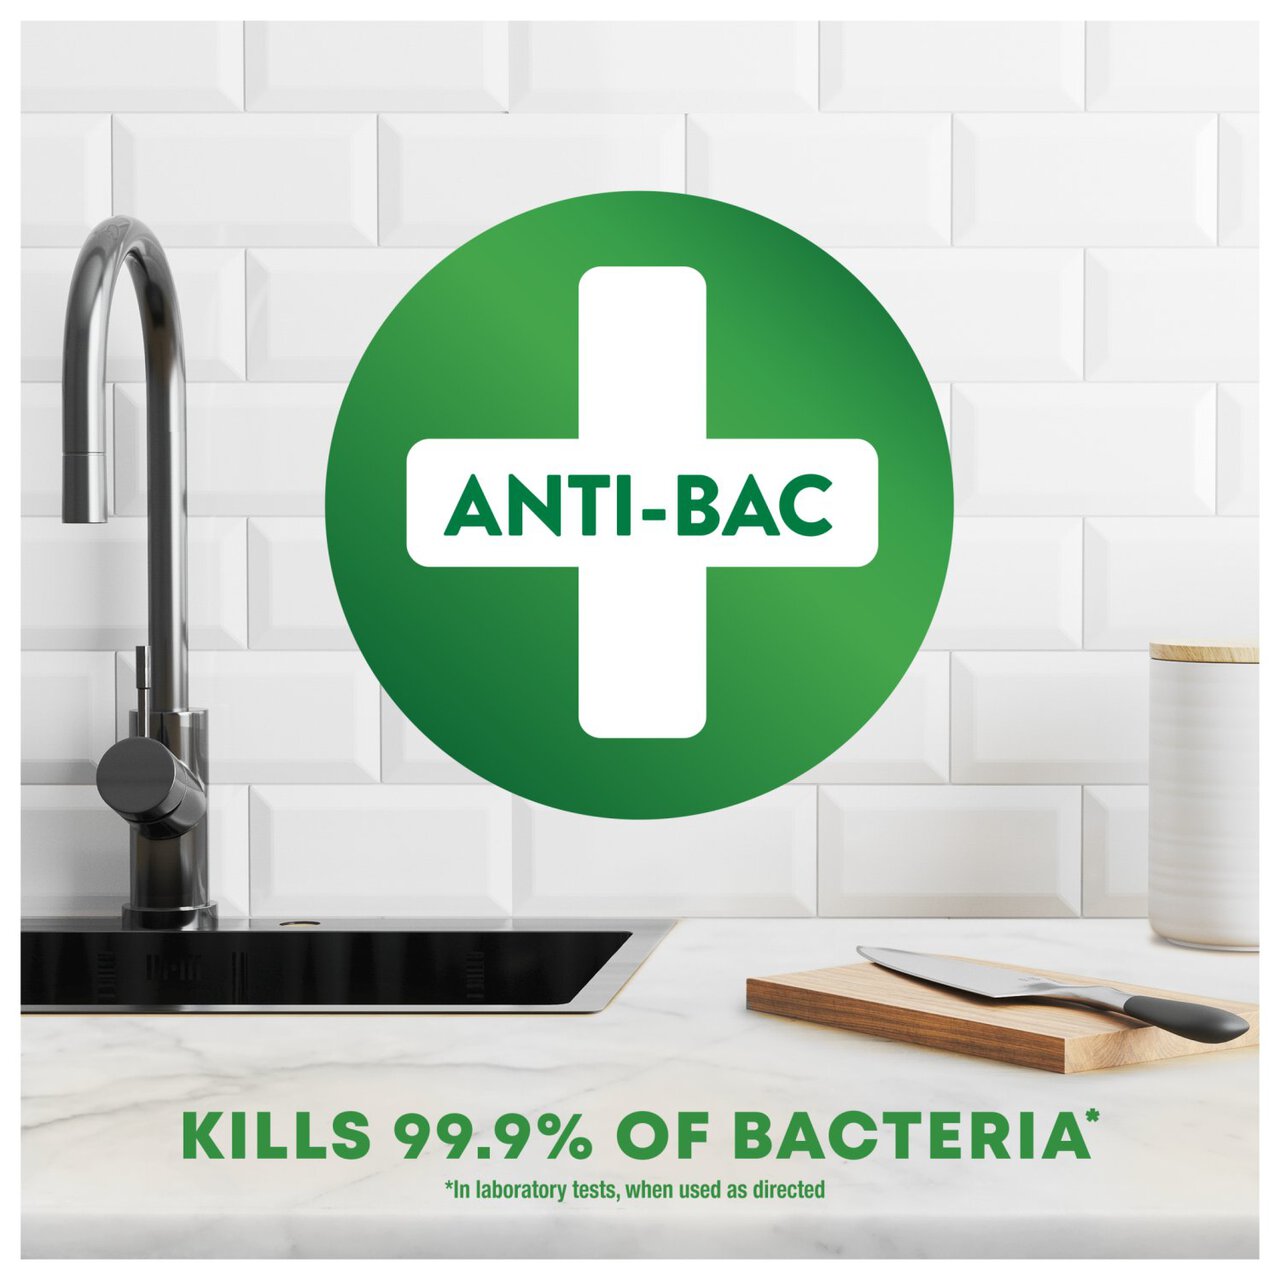 Flash Antibacterial Cleaning Wipes 48 per pack